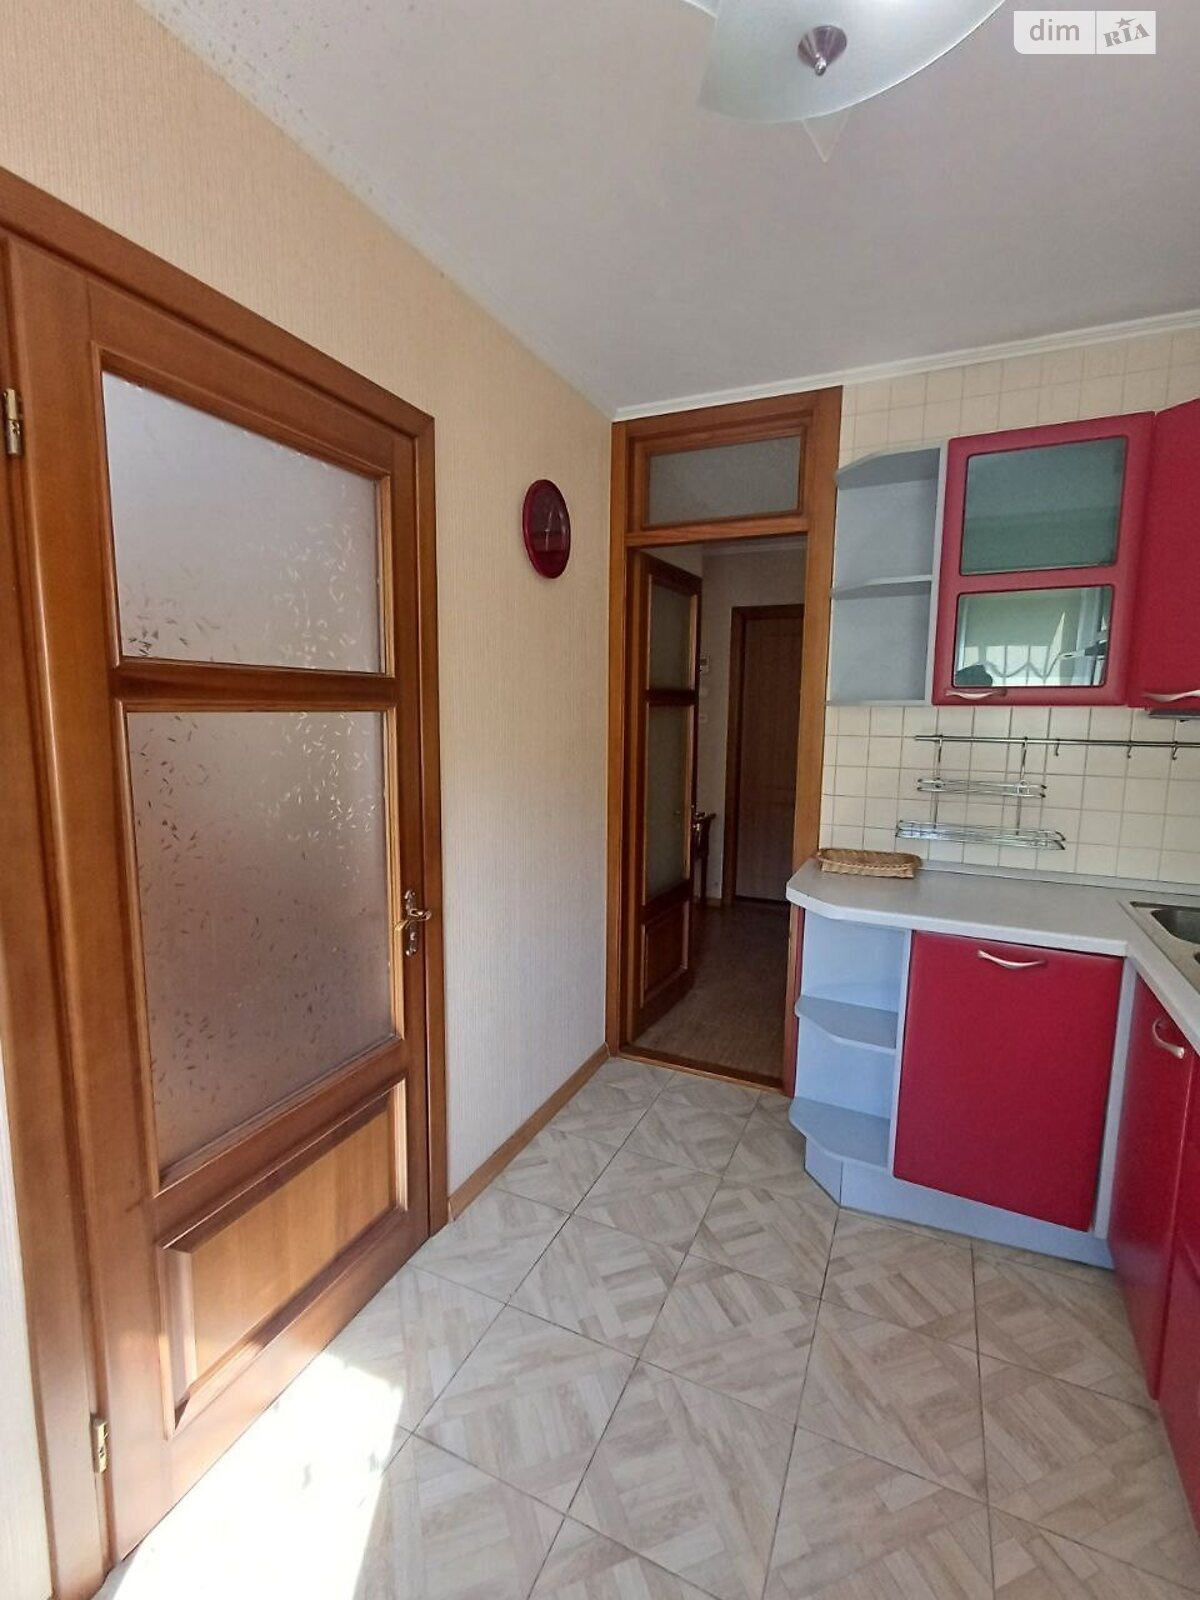 Продажа трехкомнатной квартиры в Николаеве, на просп. Мира 19, район Проспект Мира фото 1